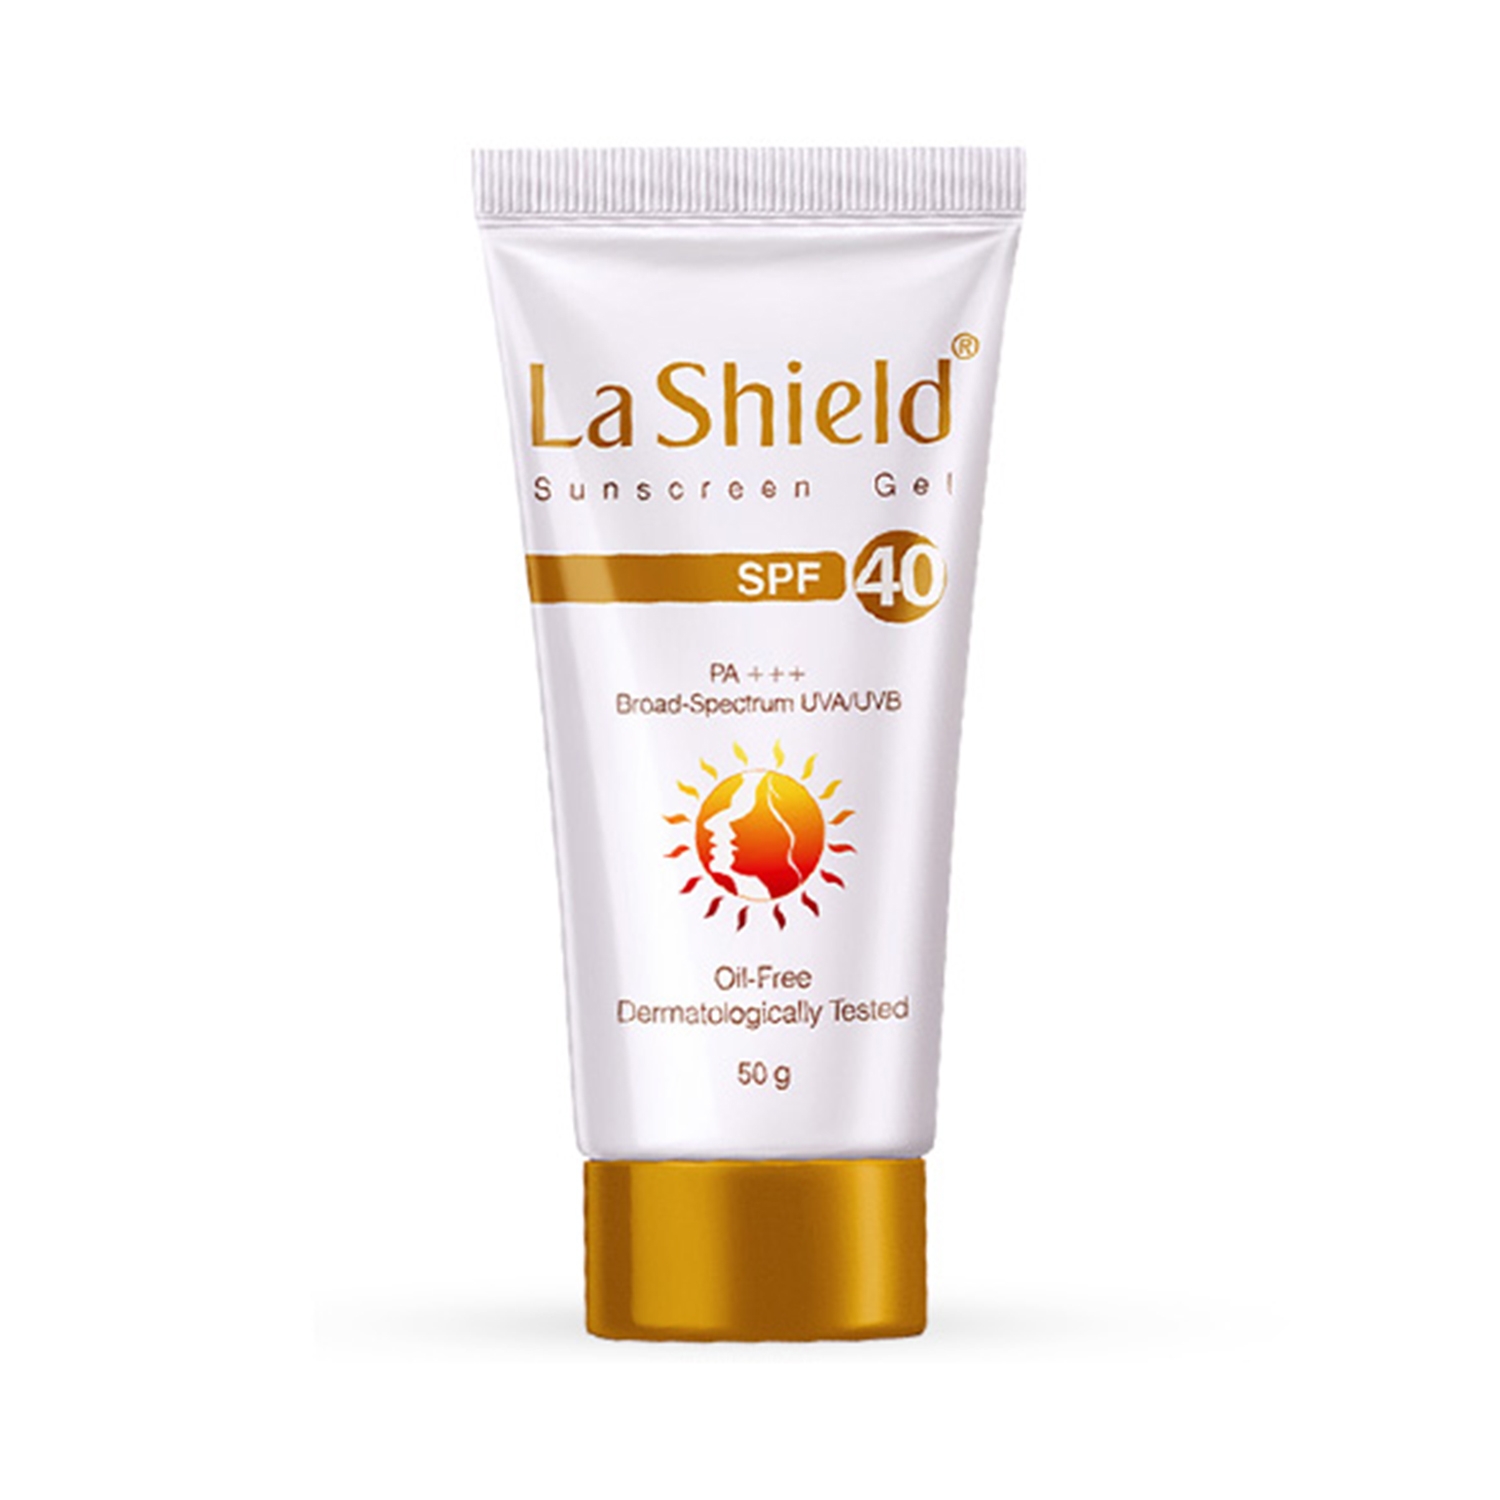 La Shield | La Shield Anti Acne SPF 40+ & PA+++ Sunscreen Gel (60g)